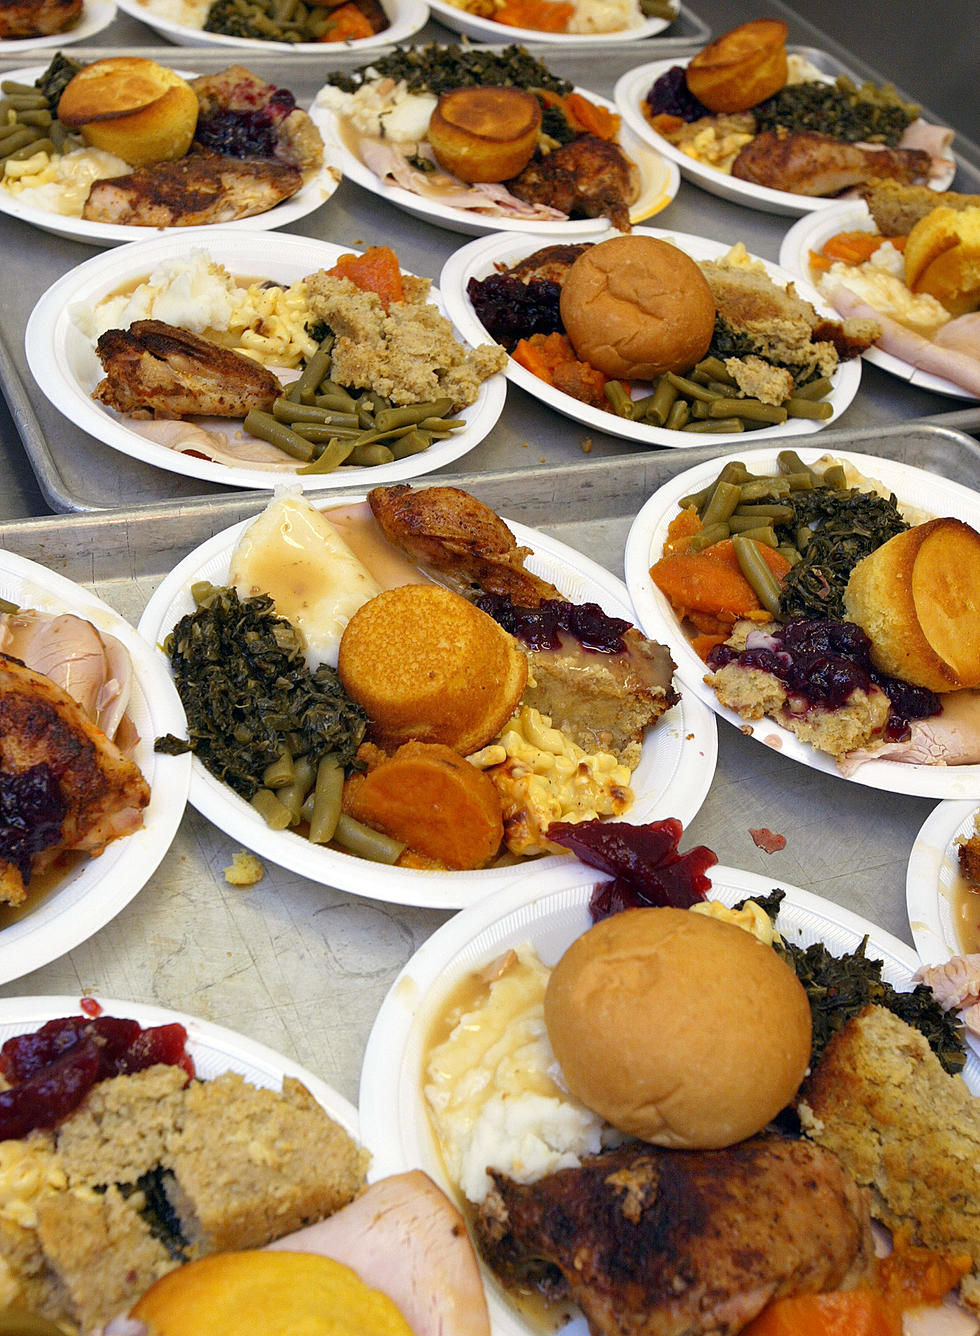 Shreveport Volunteers Needed for Holiday Senior Meal Deliveries